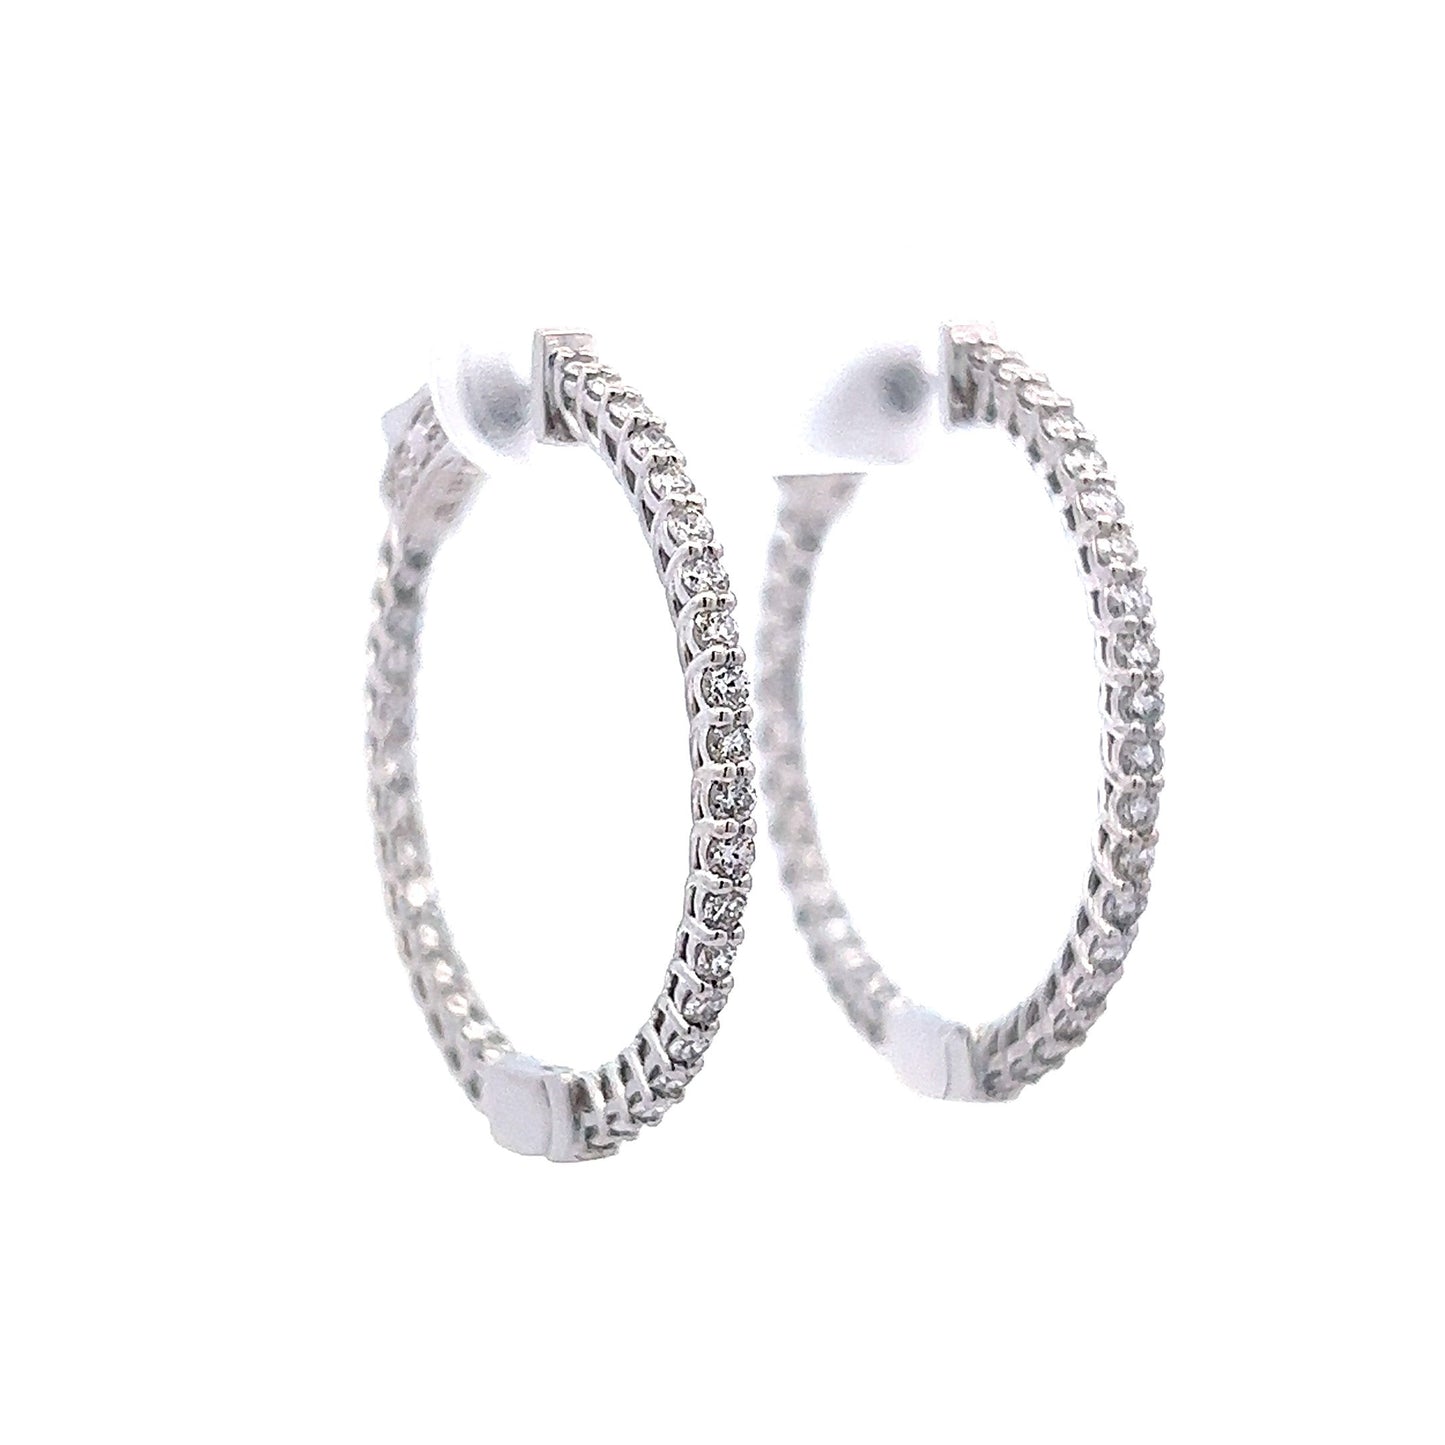 Thin Inside Out Diamond Hoop Earrings in 14k White Gold